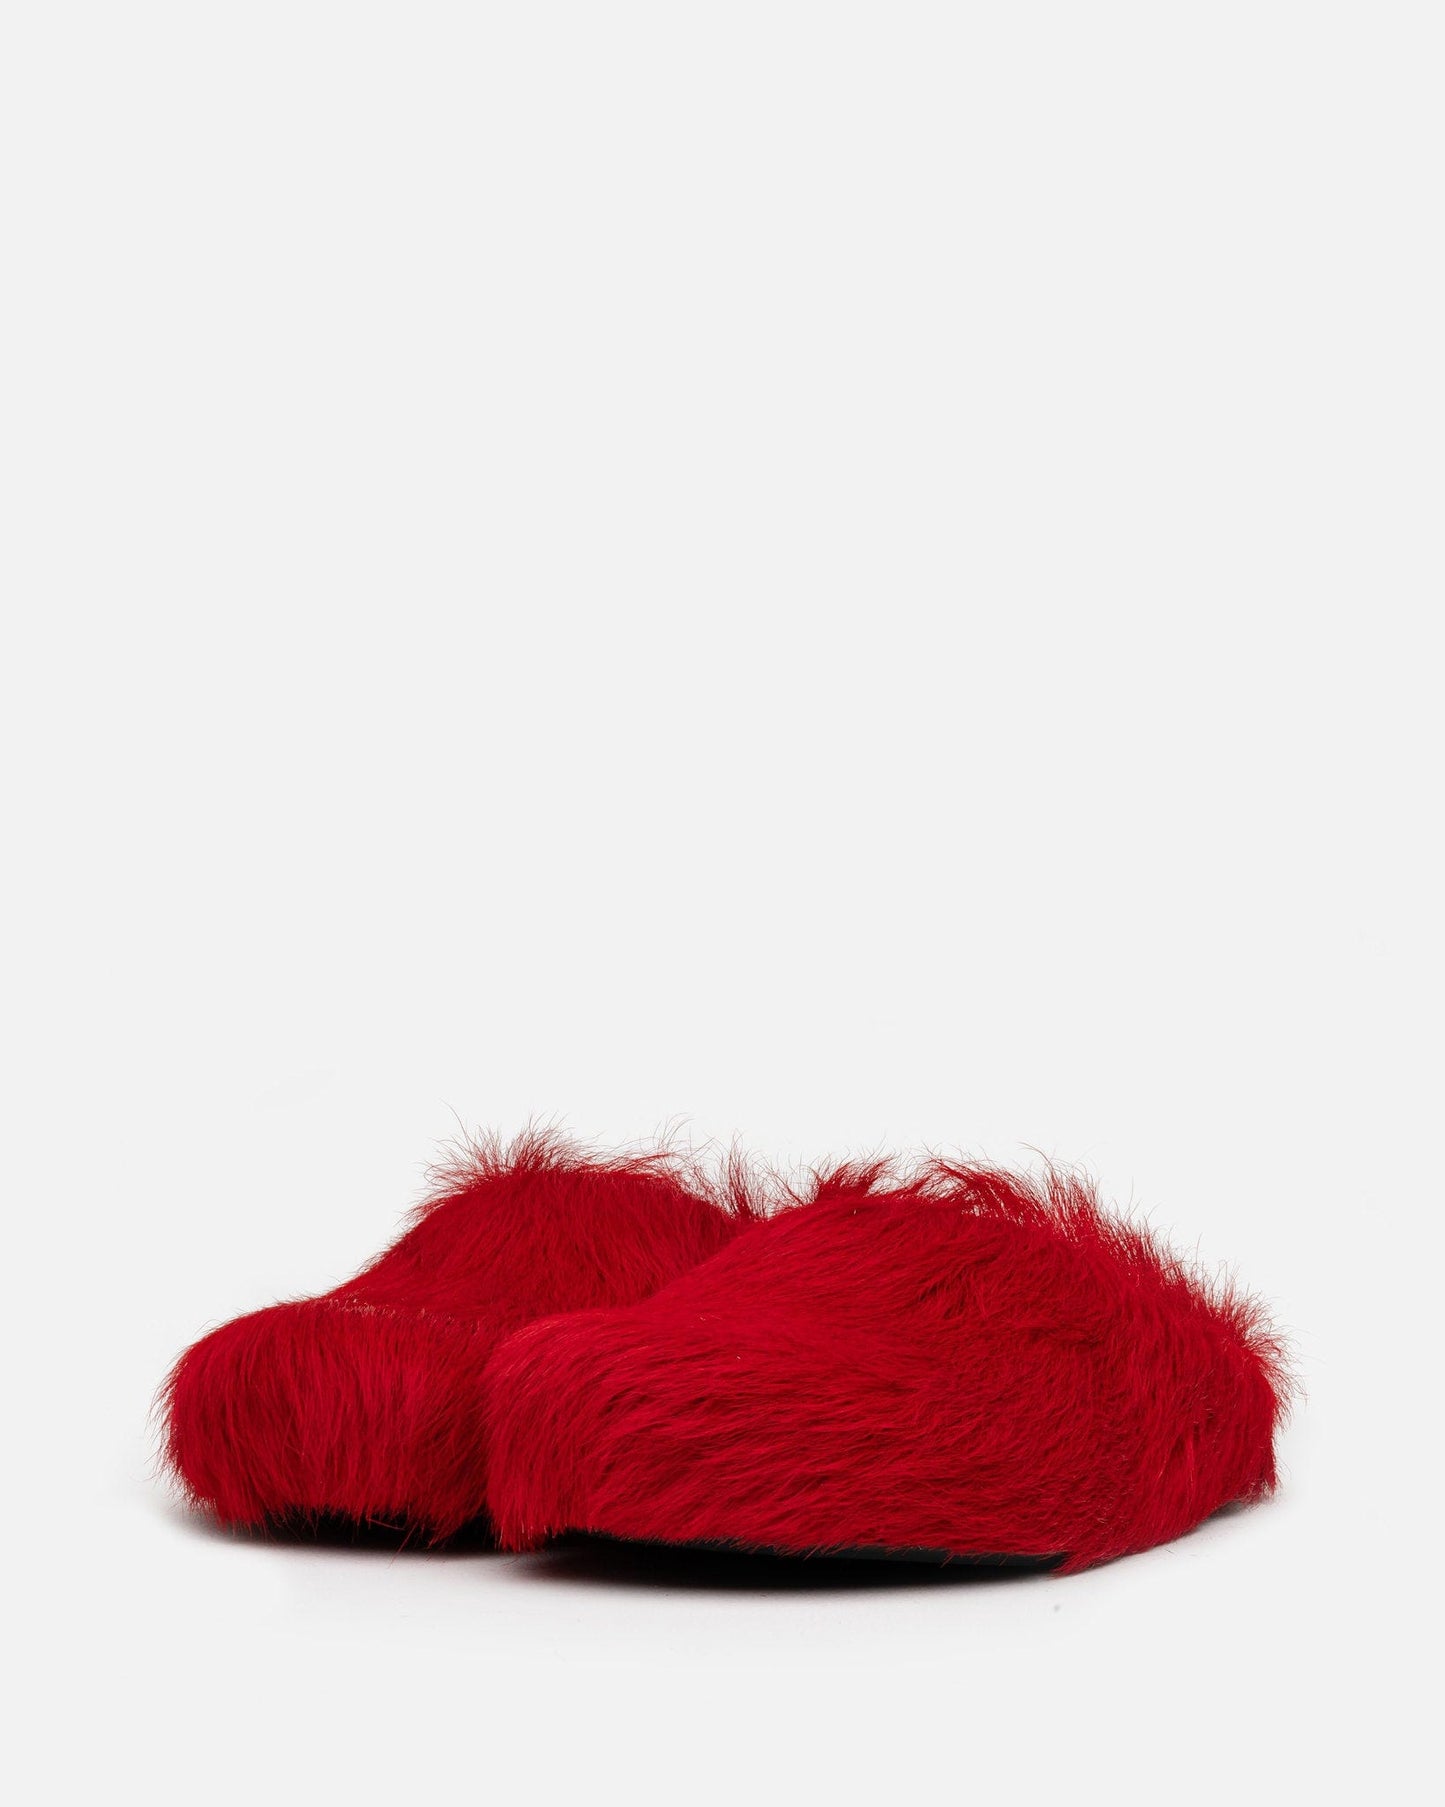 Marni Men's Shoes Long Calf-Hair Sabot in Red